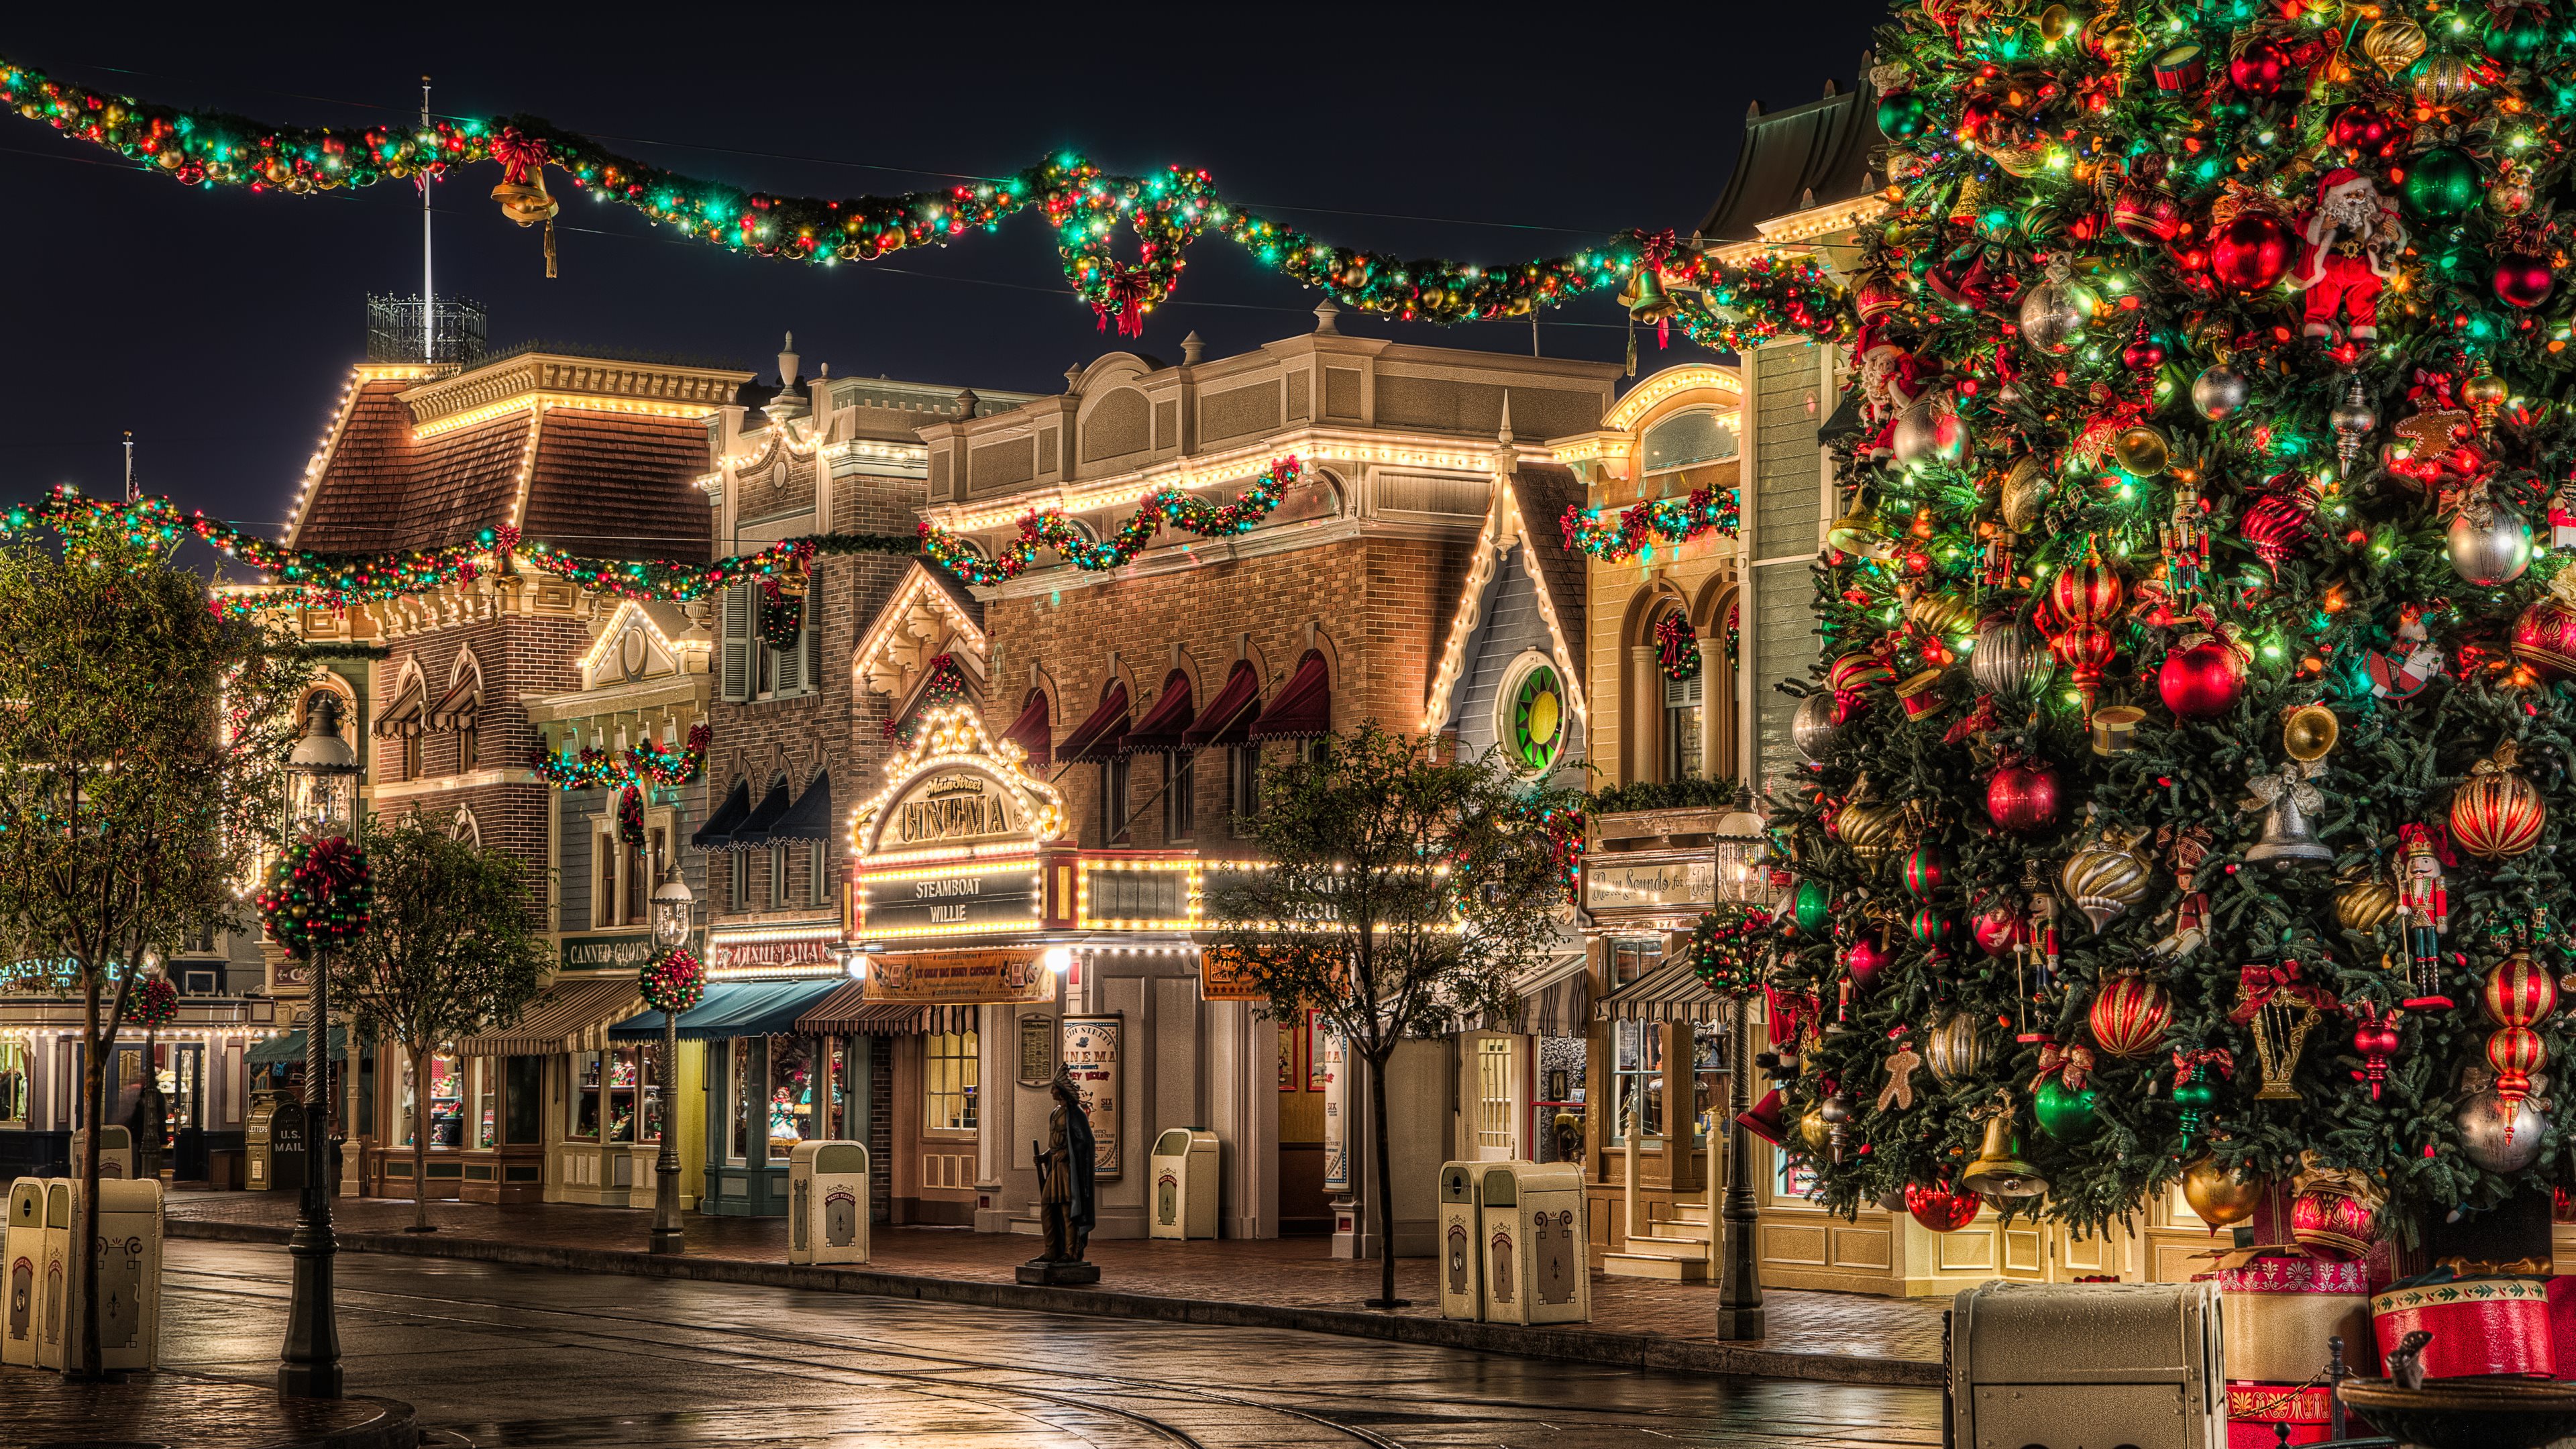 Christmas Image On Main Street